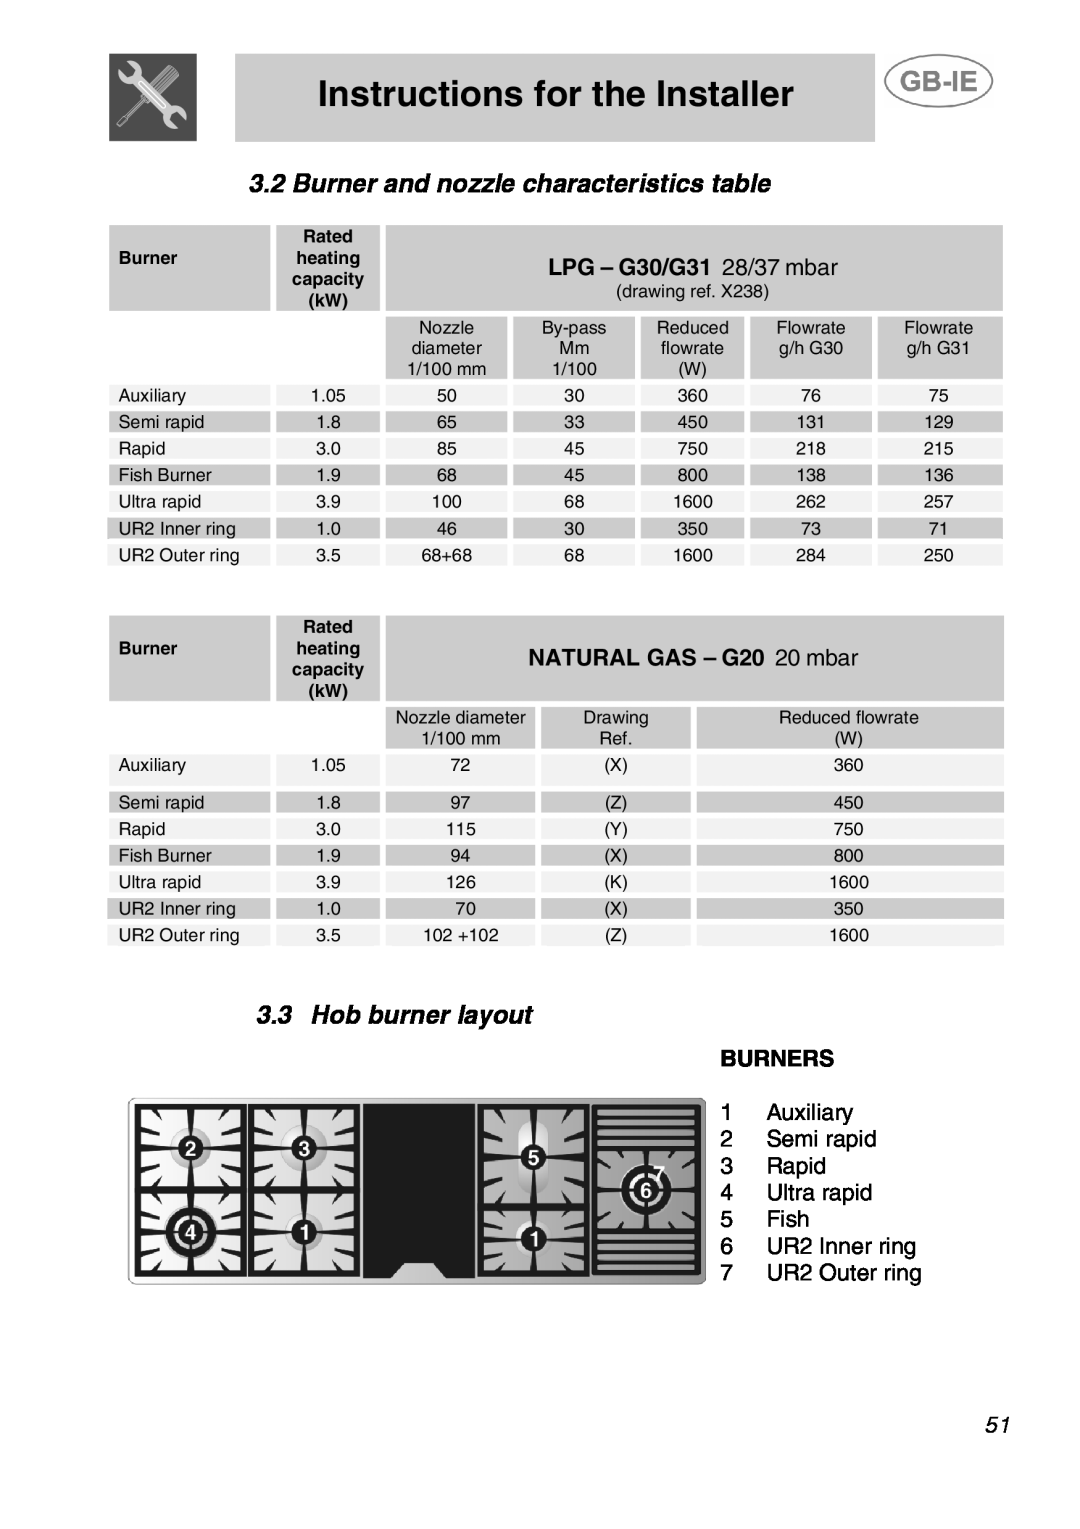 Smeg A5-6 Burner and nozzle characteristics table, Hob burner layout, LPG - G30/G31 28/37 mbar, NATURAL GAS - G20 20 mbar 